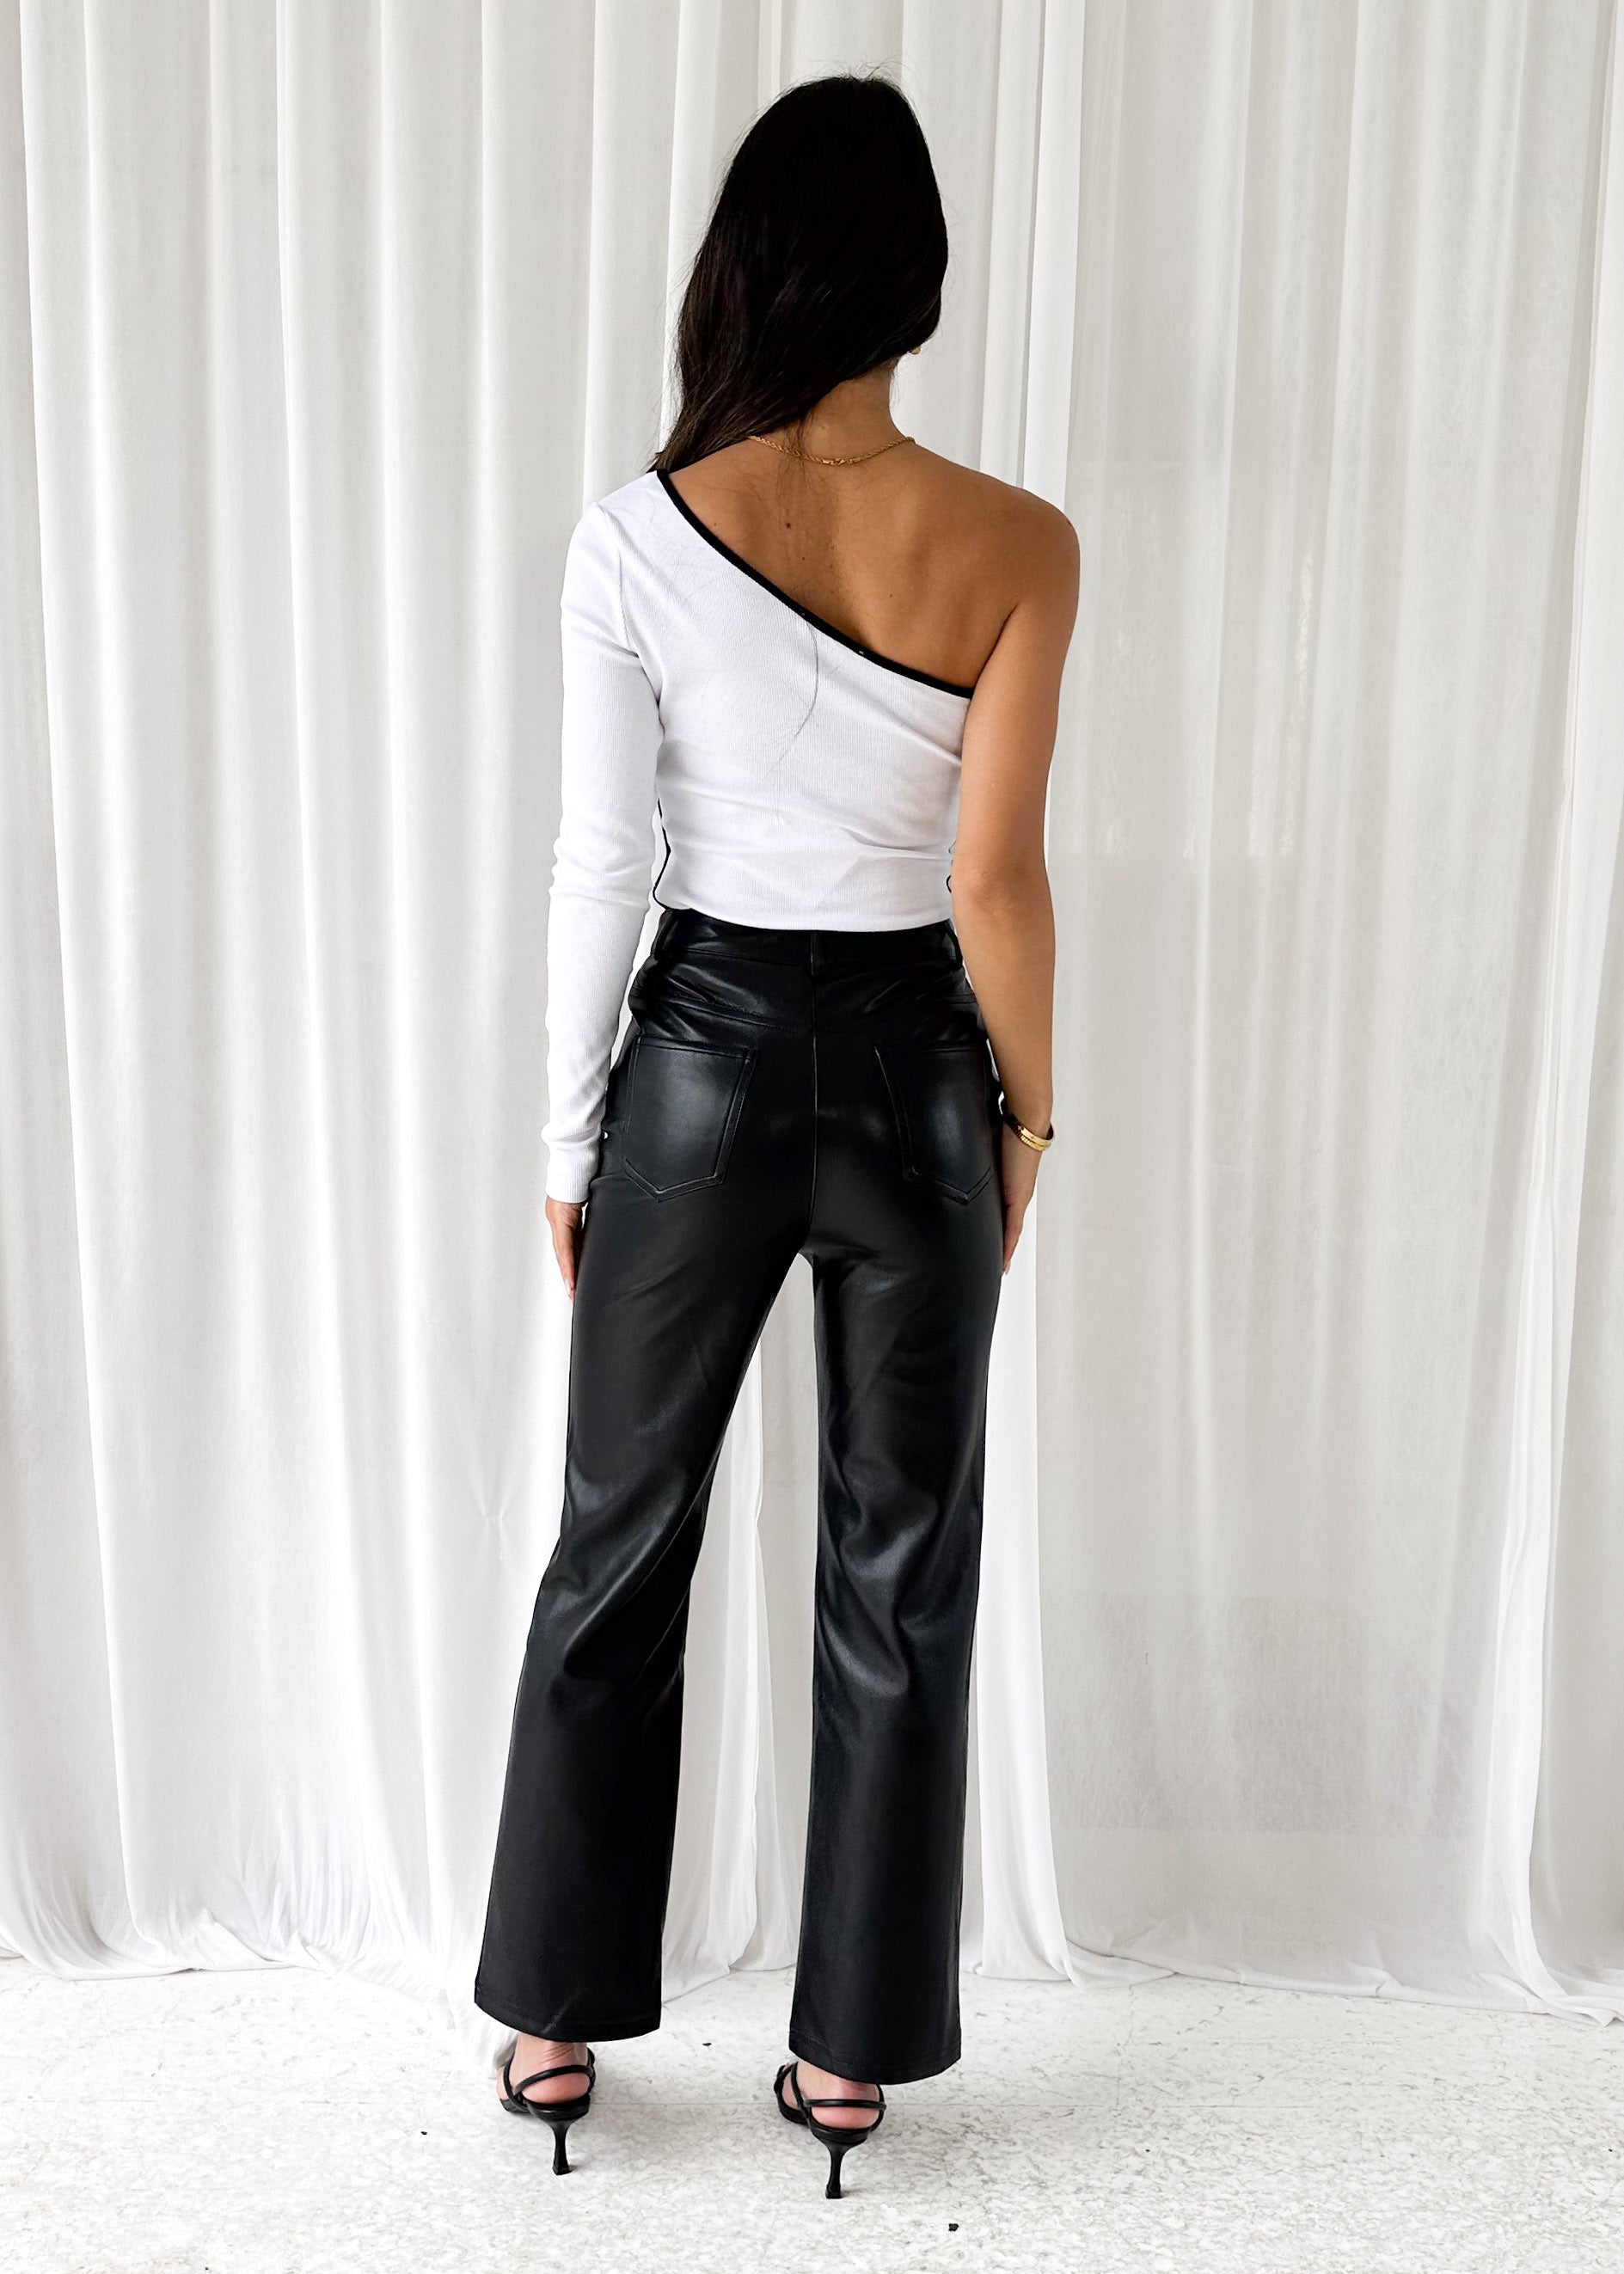 Erikah Leather Look Pants - Black